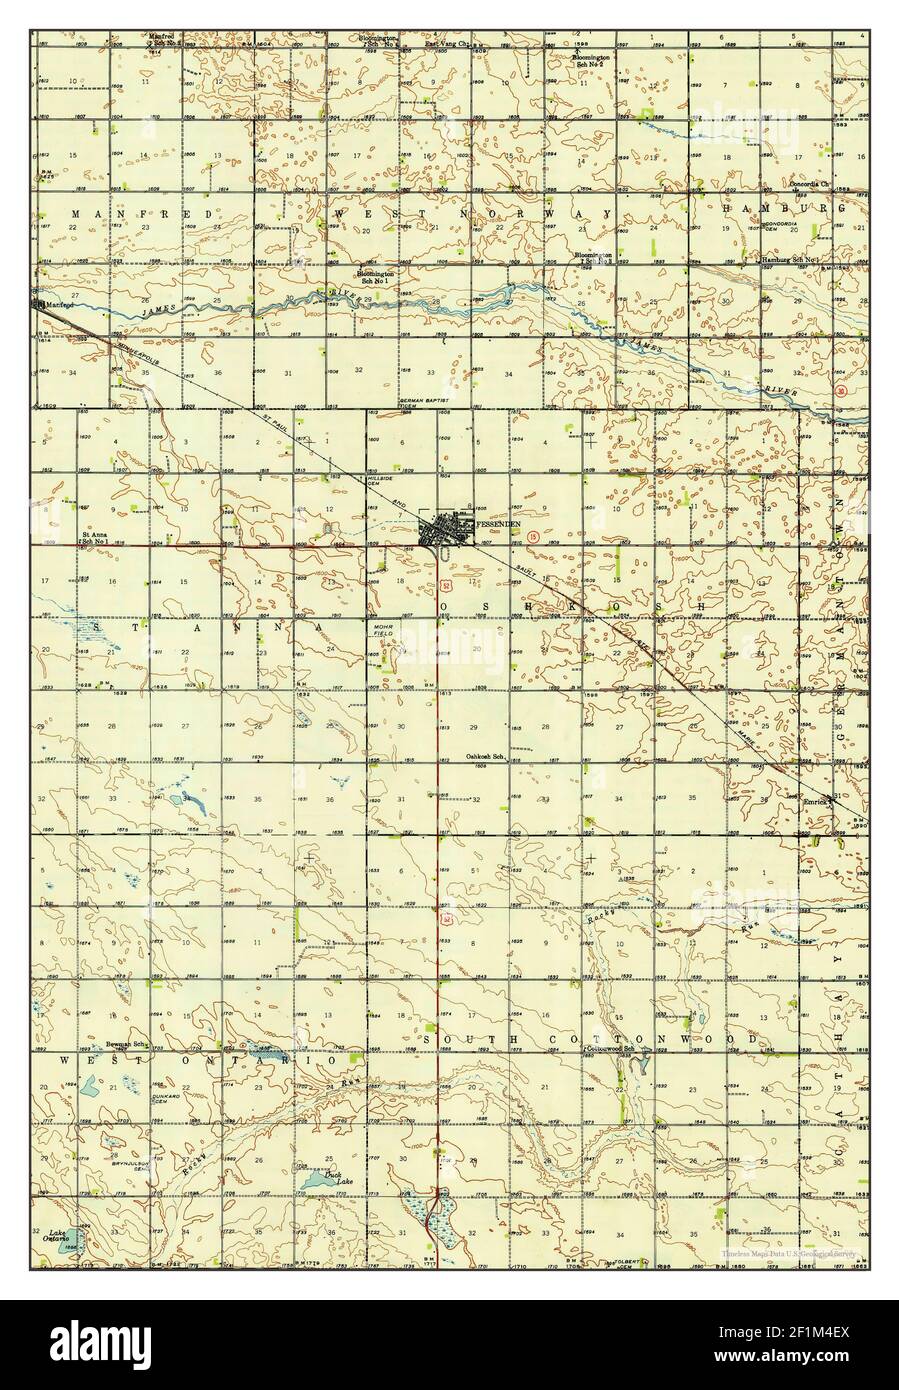 Fessenden, North Dakota, map 1948, 1:62500, United States of America by Timeless Maps, data U.S. Geological Survey Stock Photo